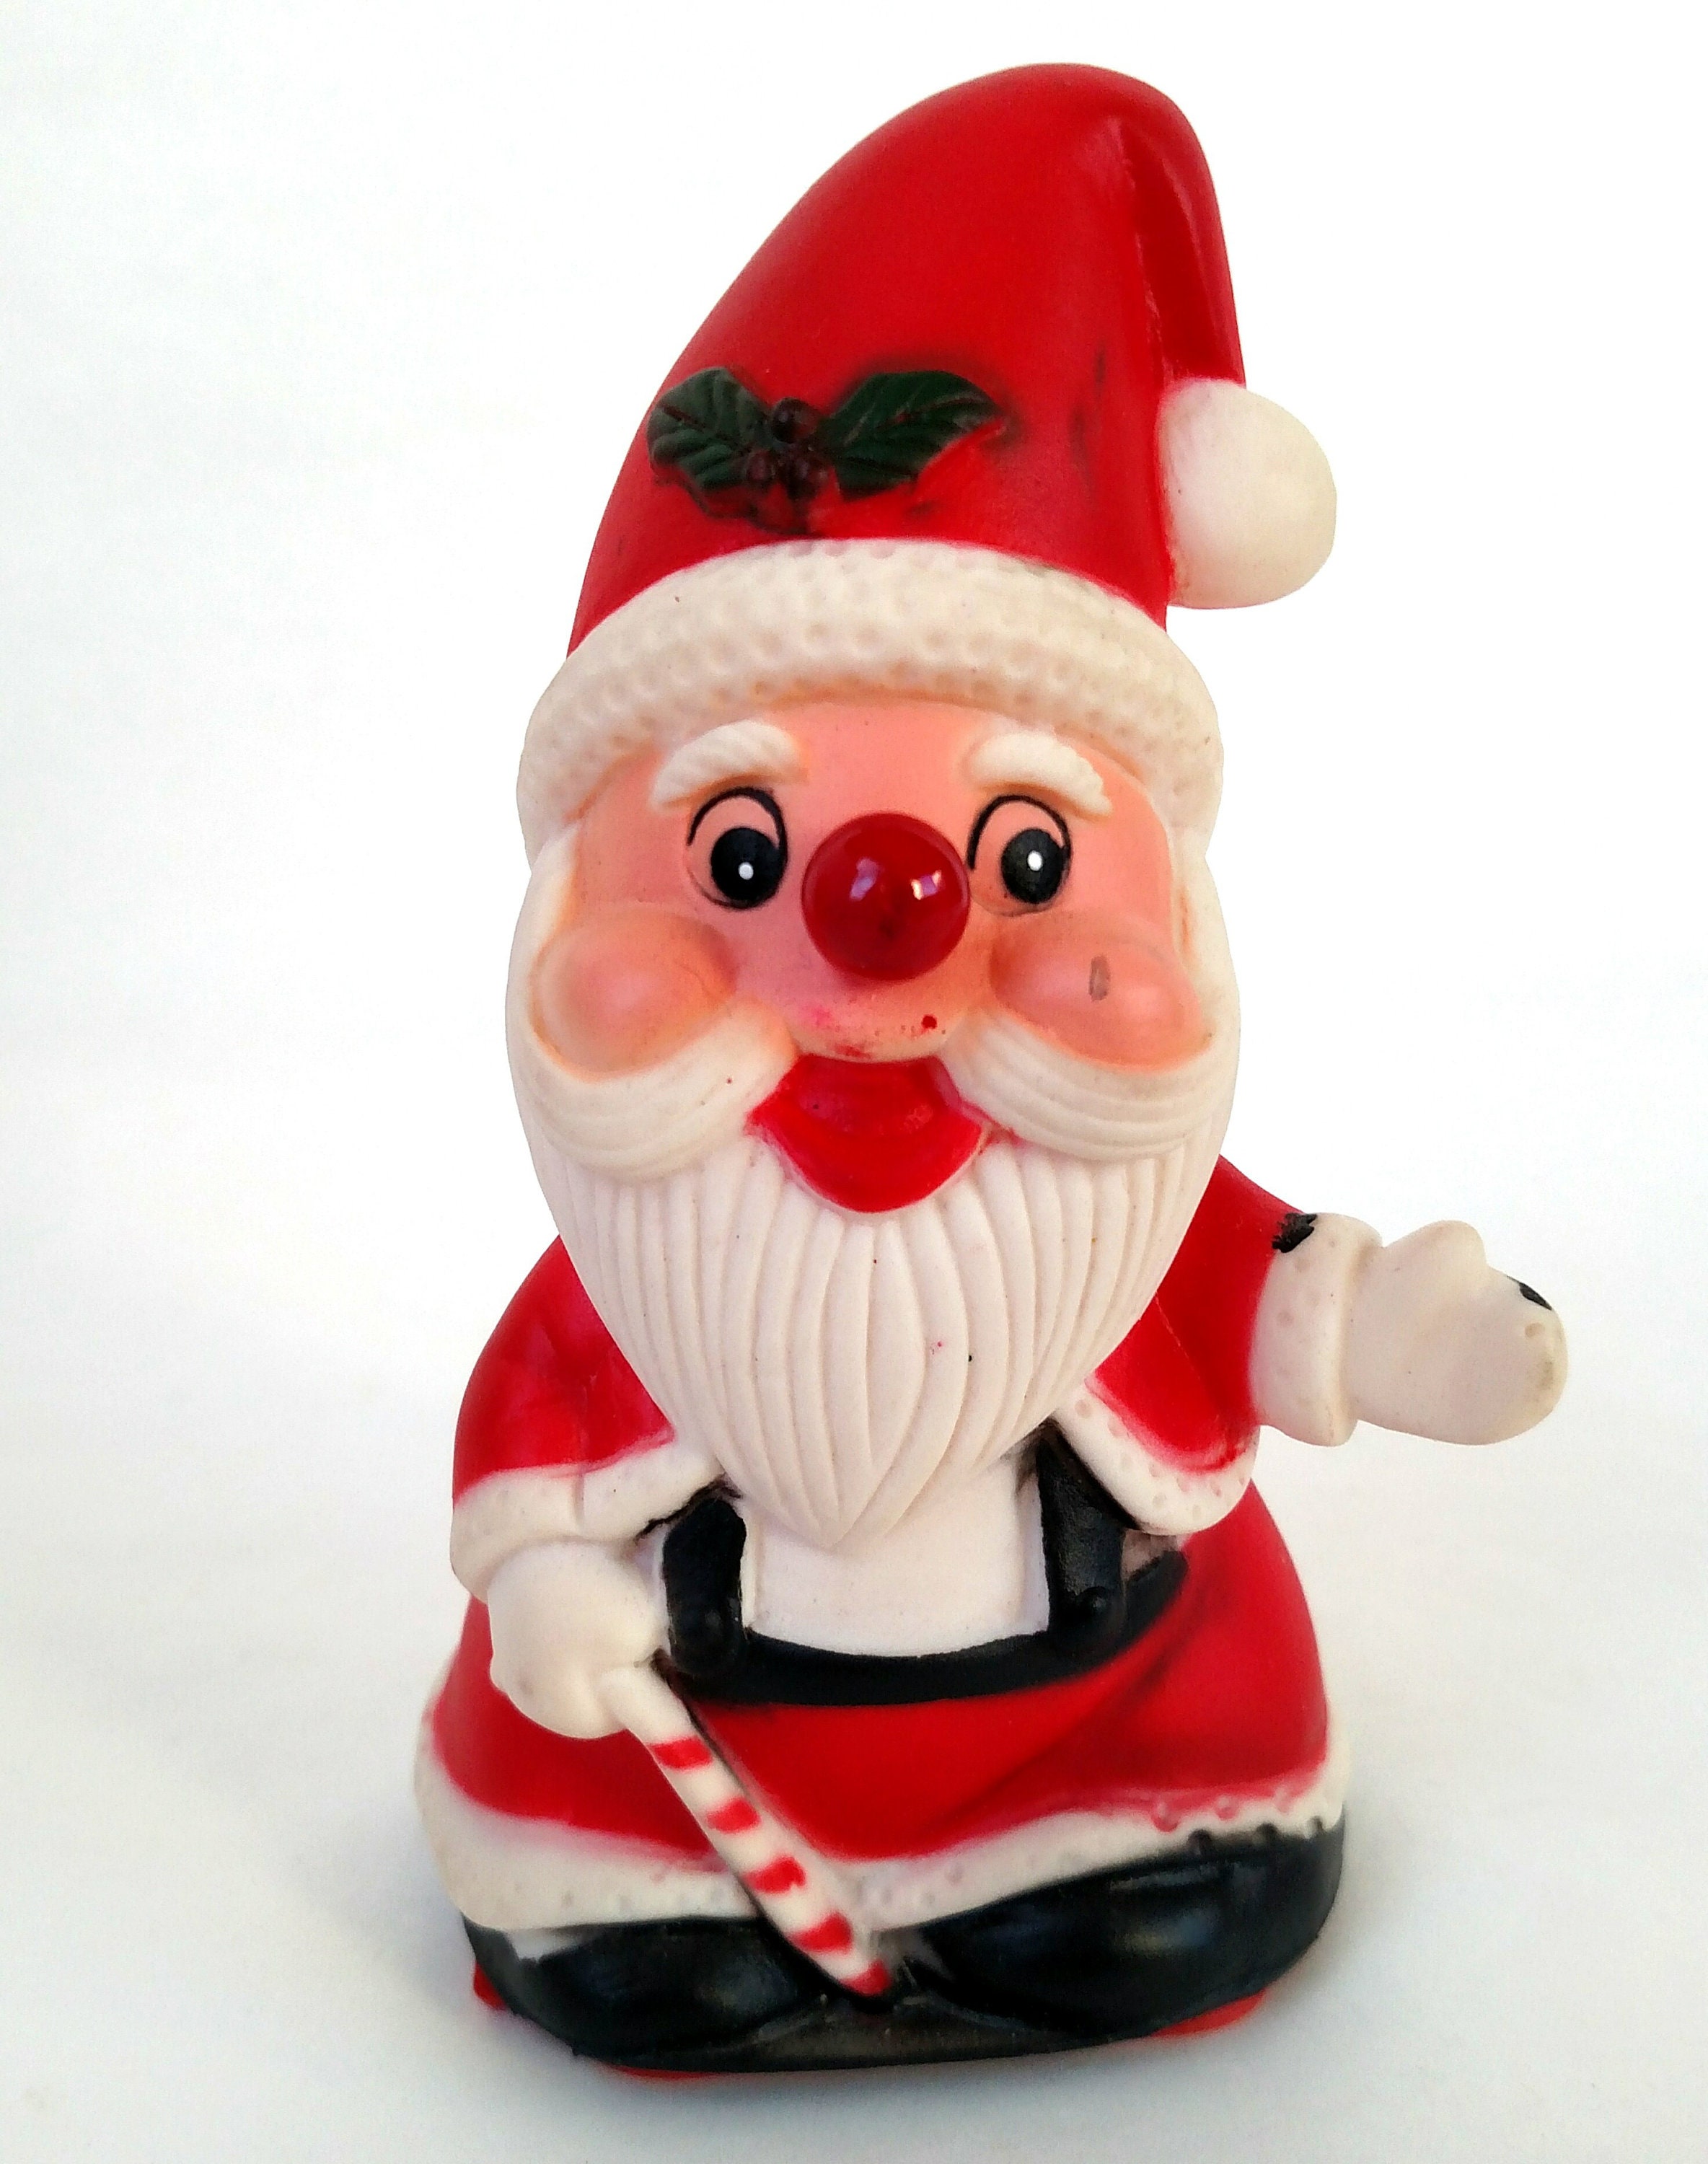 Vintage Plastic Santa Figurine with Blinking Light Nose - In Original Box